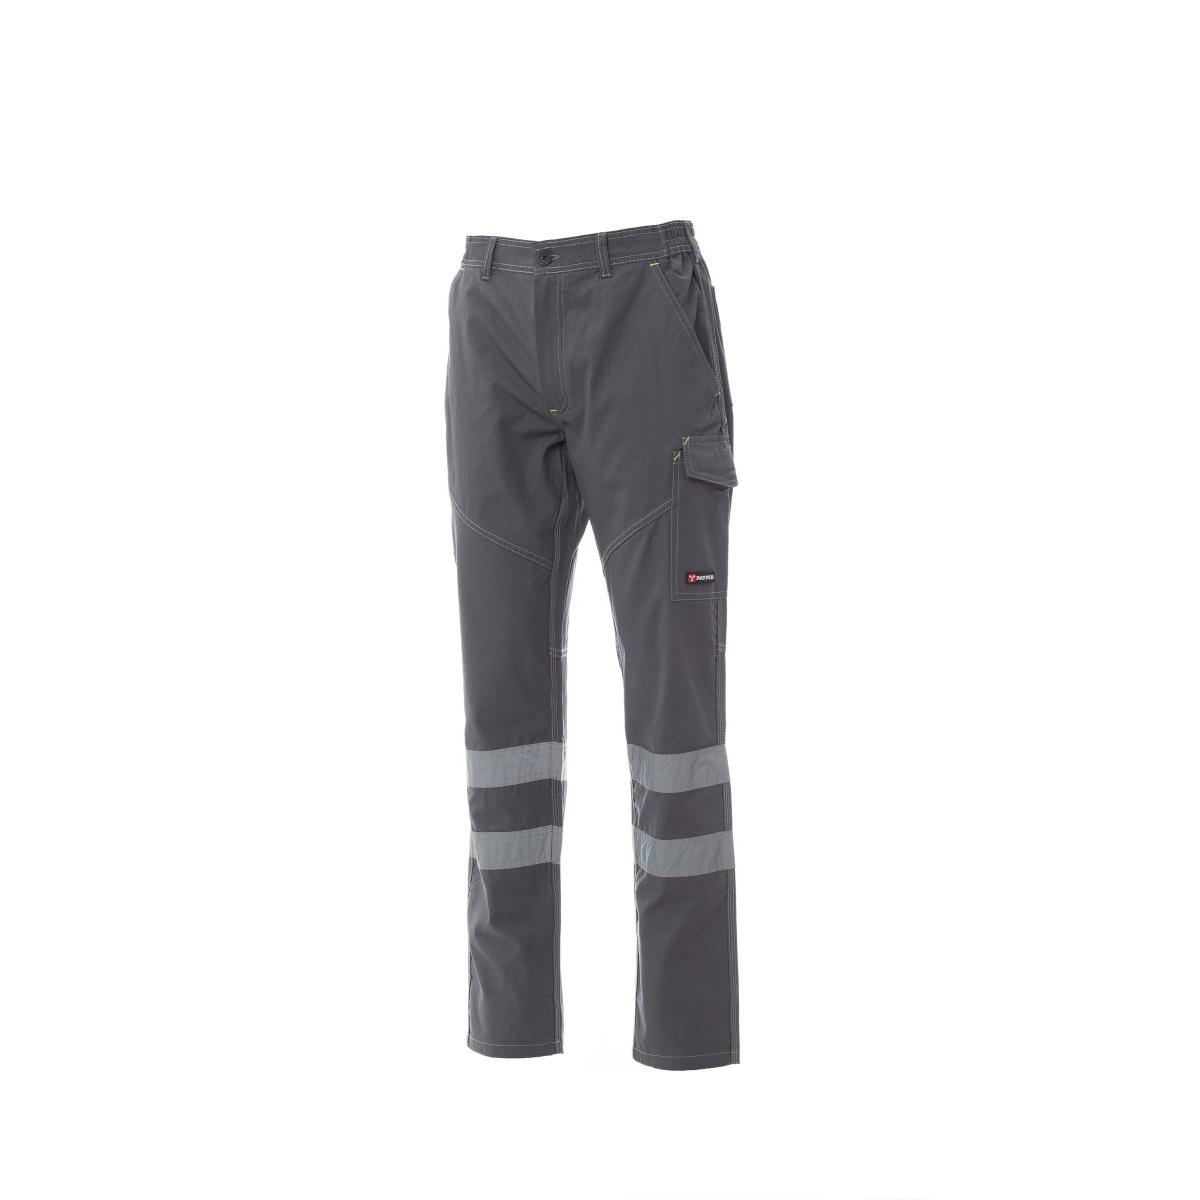 Pantaloni Payper 001709 Worker Summer Reflex, elasticizzati